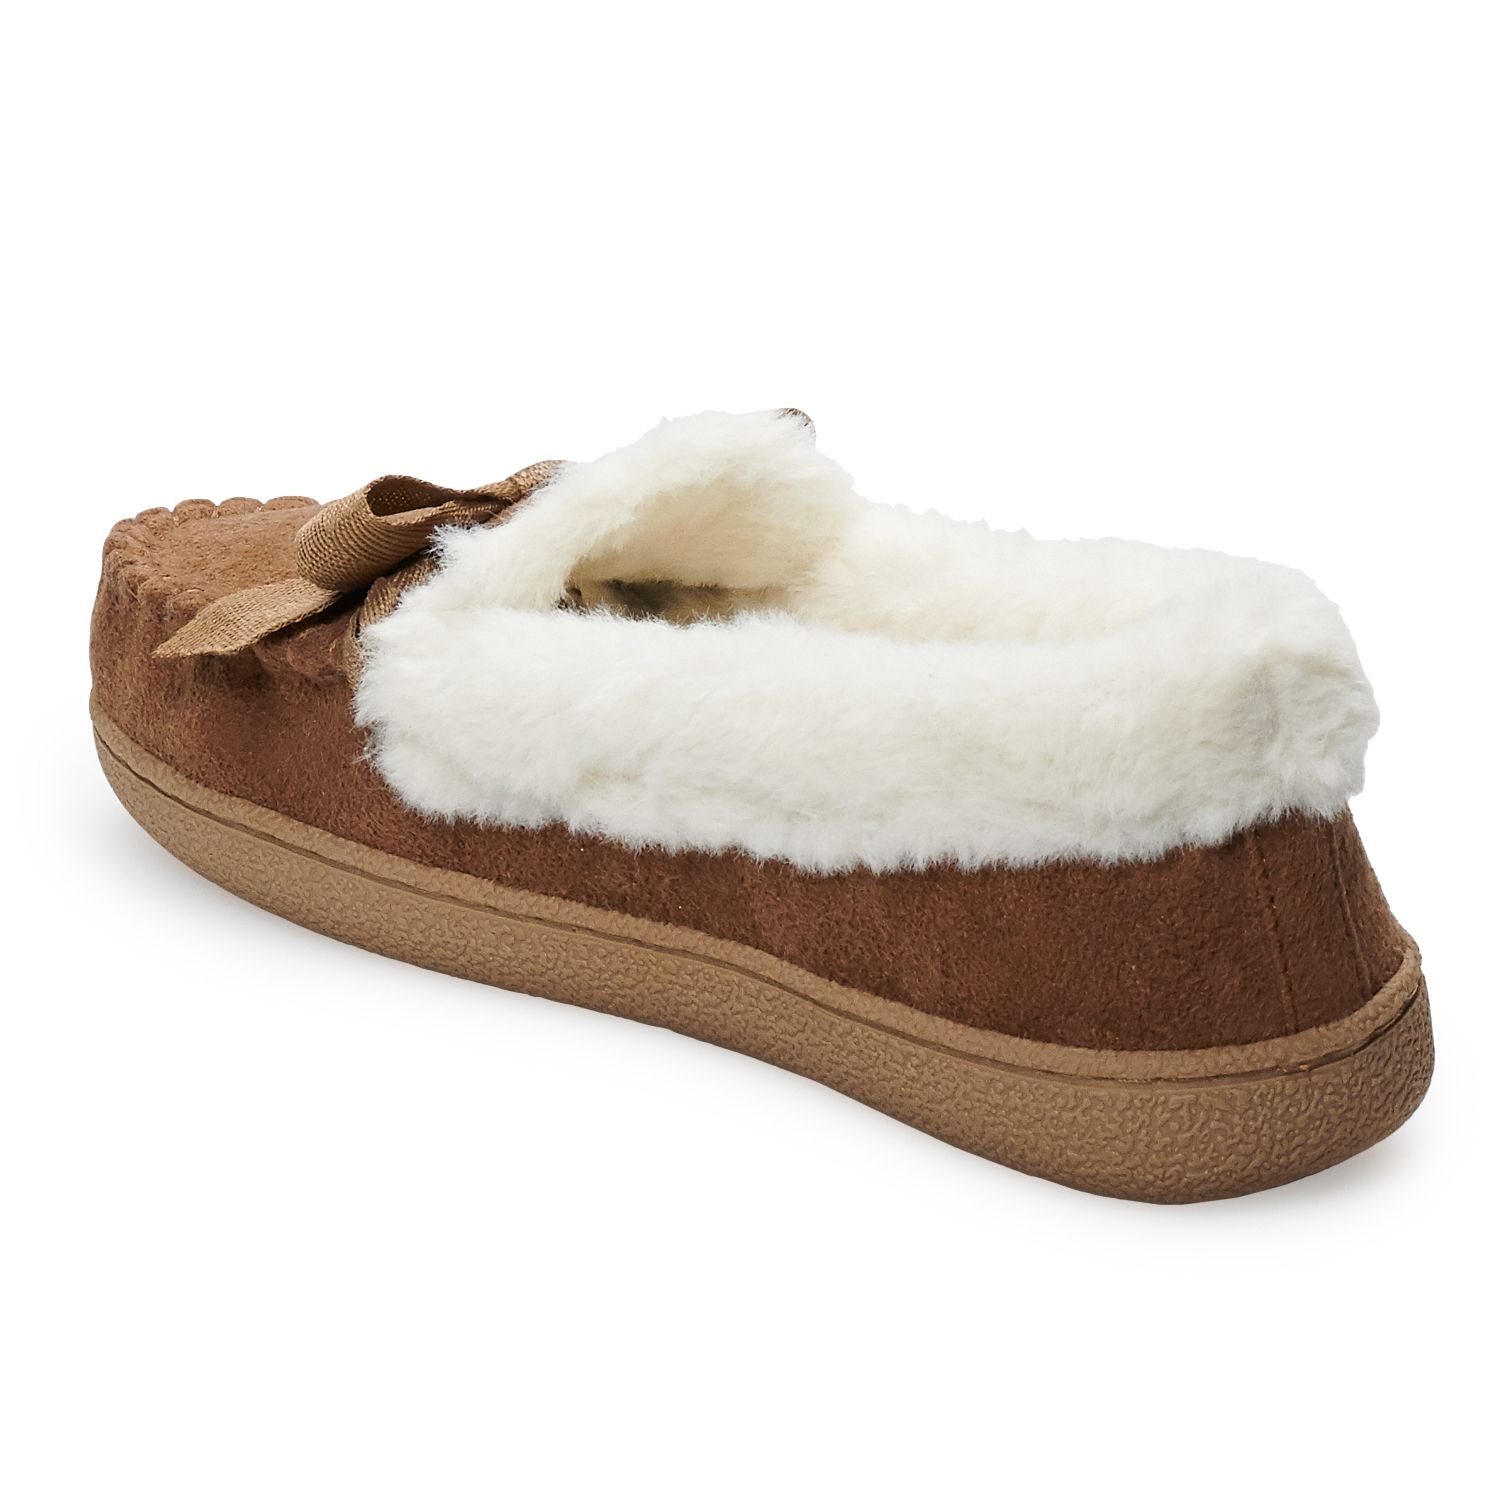 sonoma goods for life slippers